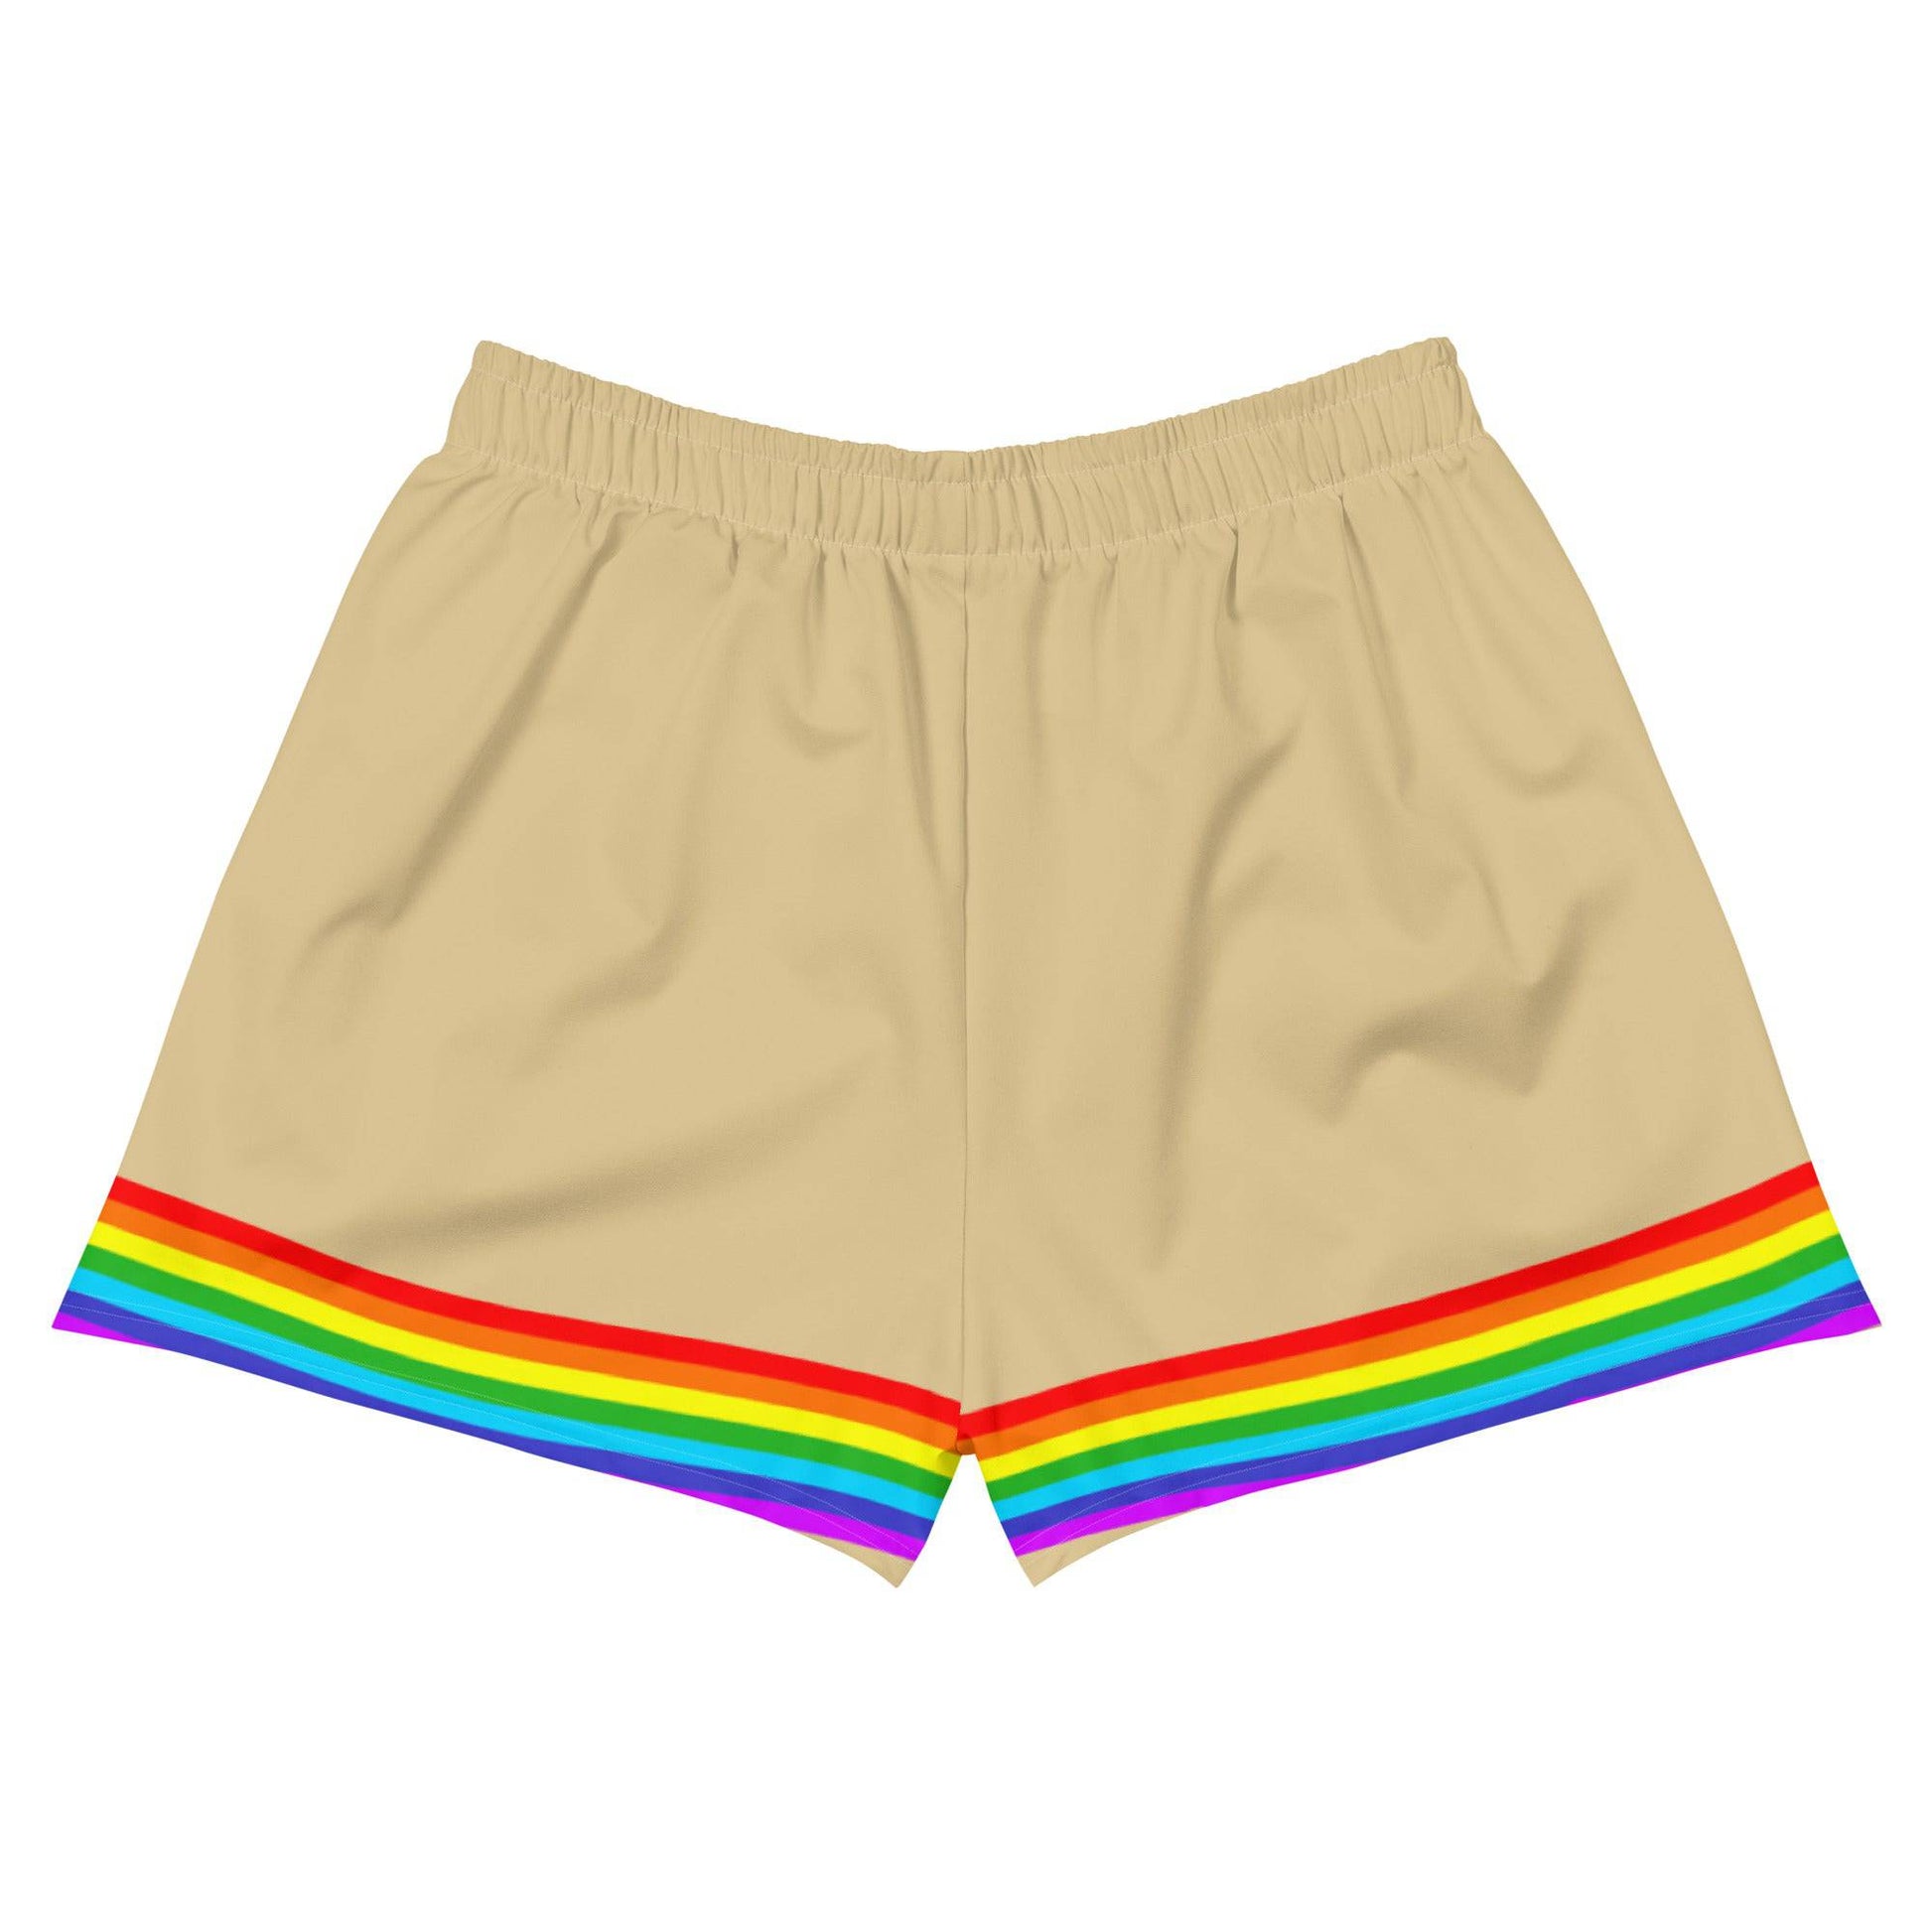 Tan Rainbow Pride Athletic Shorts - Rose Gold Co. Shop